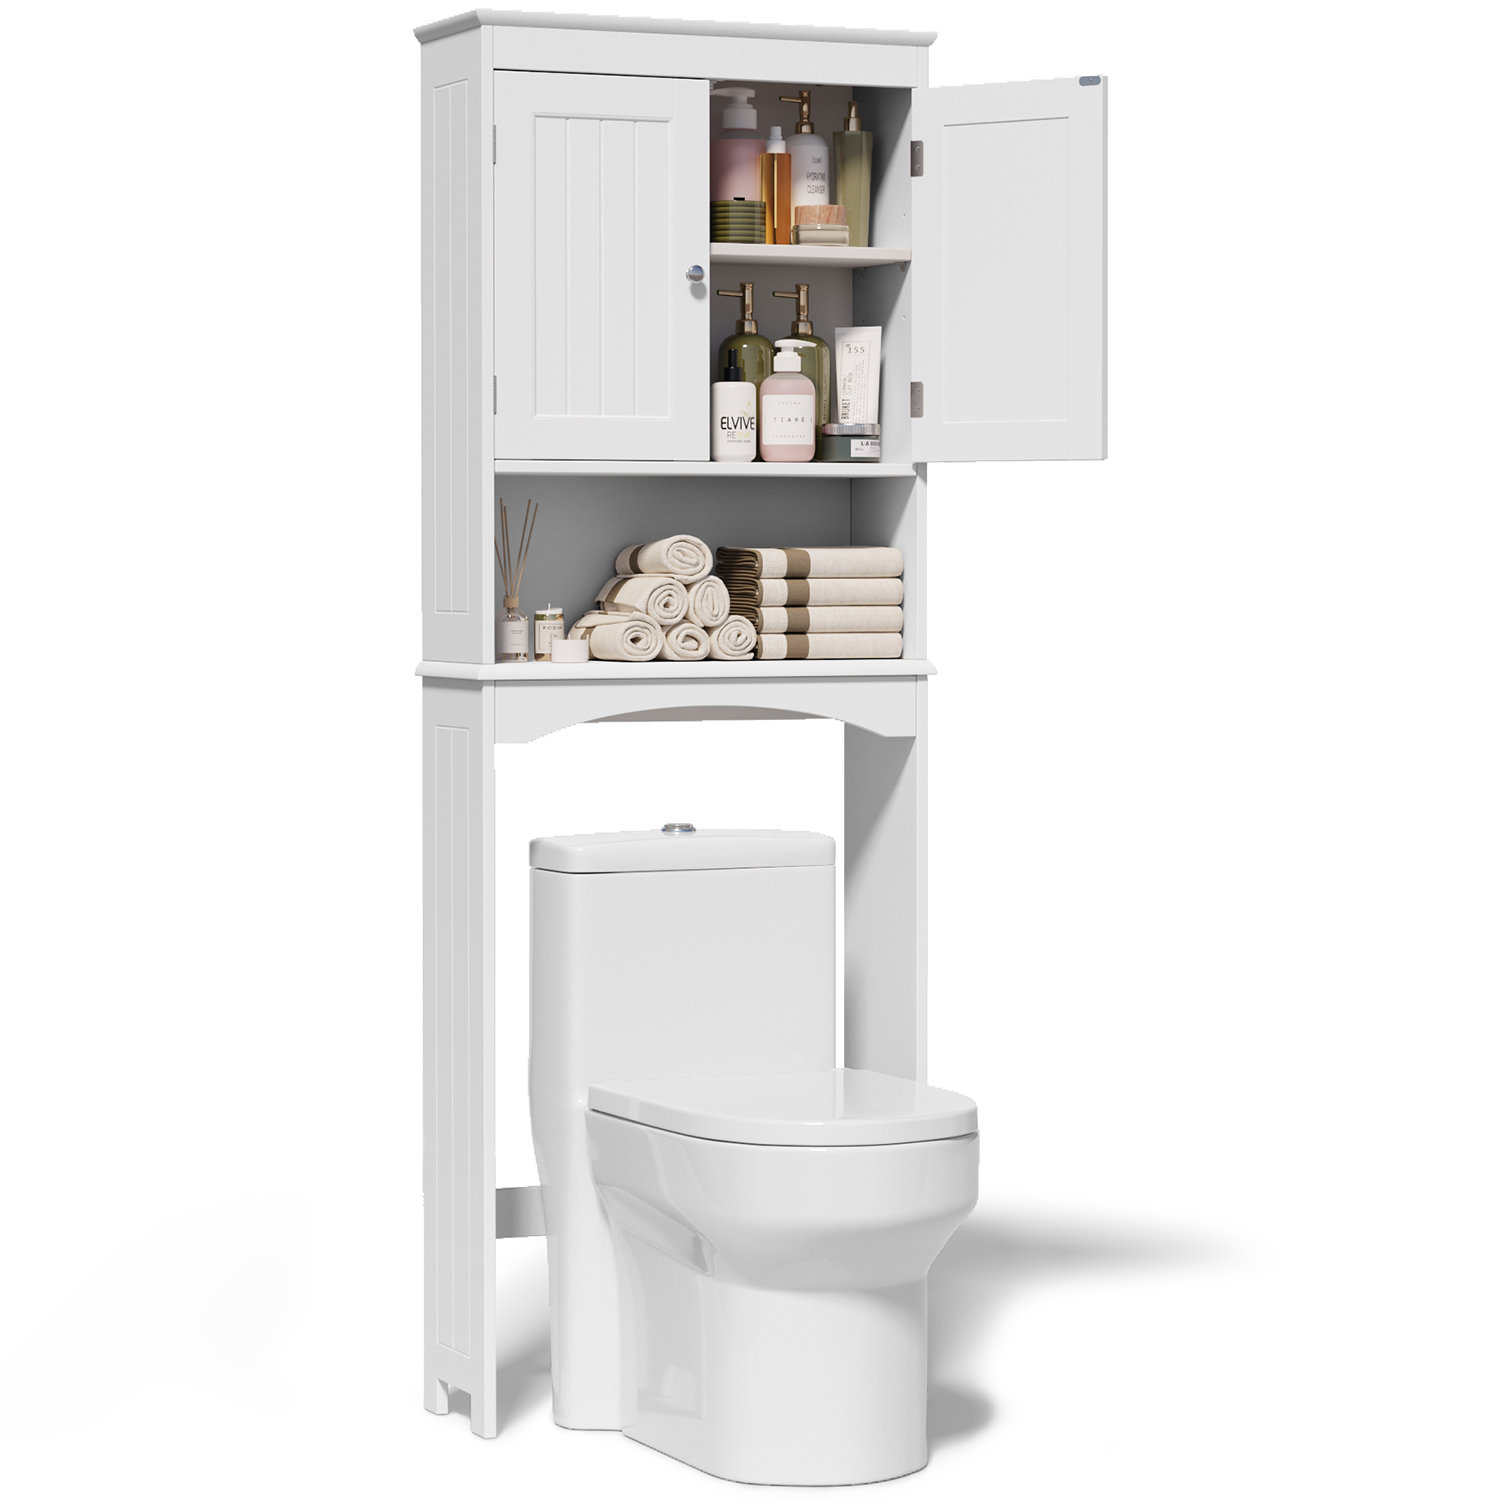 VASAGLE Small Bathroom Storage Cabinet, Toilet Paper Holder with Storage, Toilet Paper Storage Cabinet, Bathroom Organizer with Adjustable Shelf, Wate